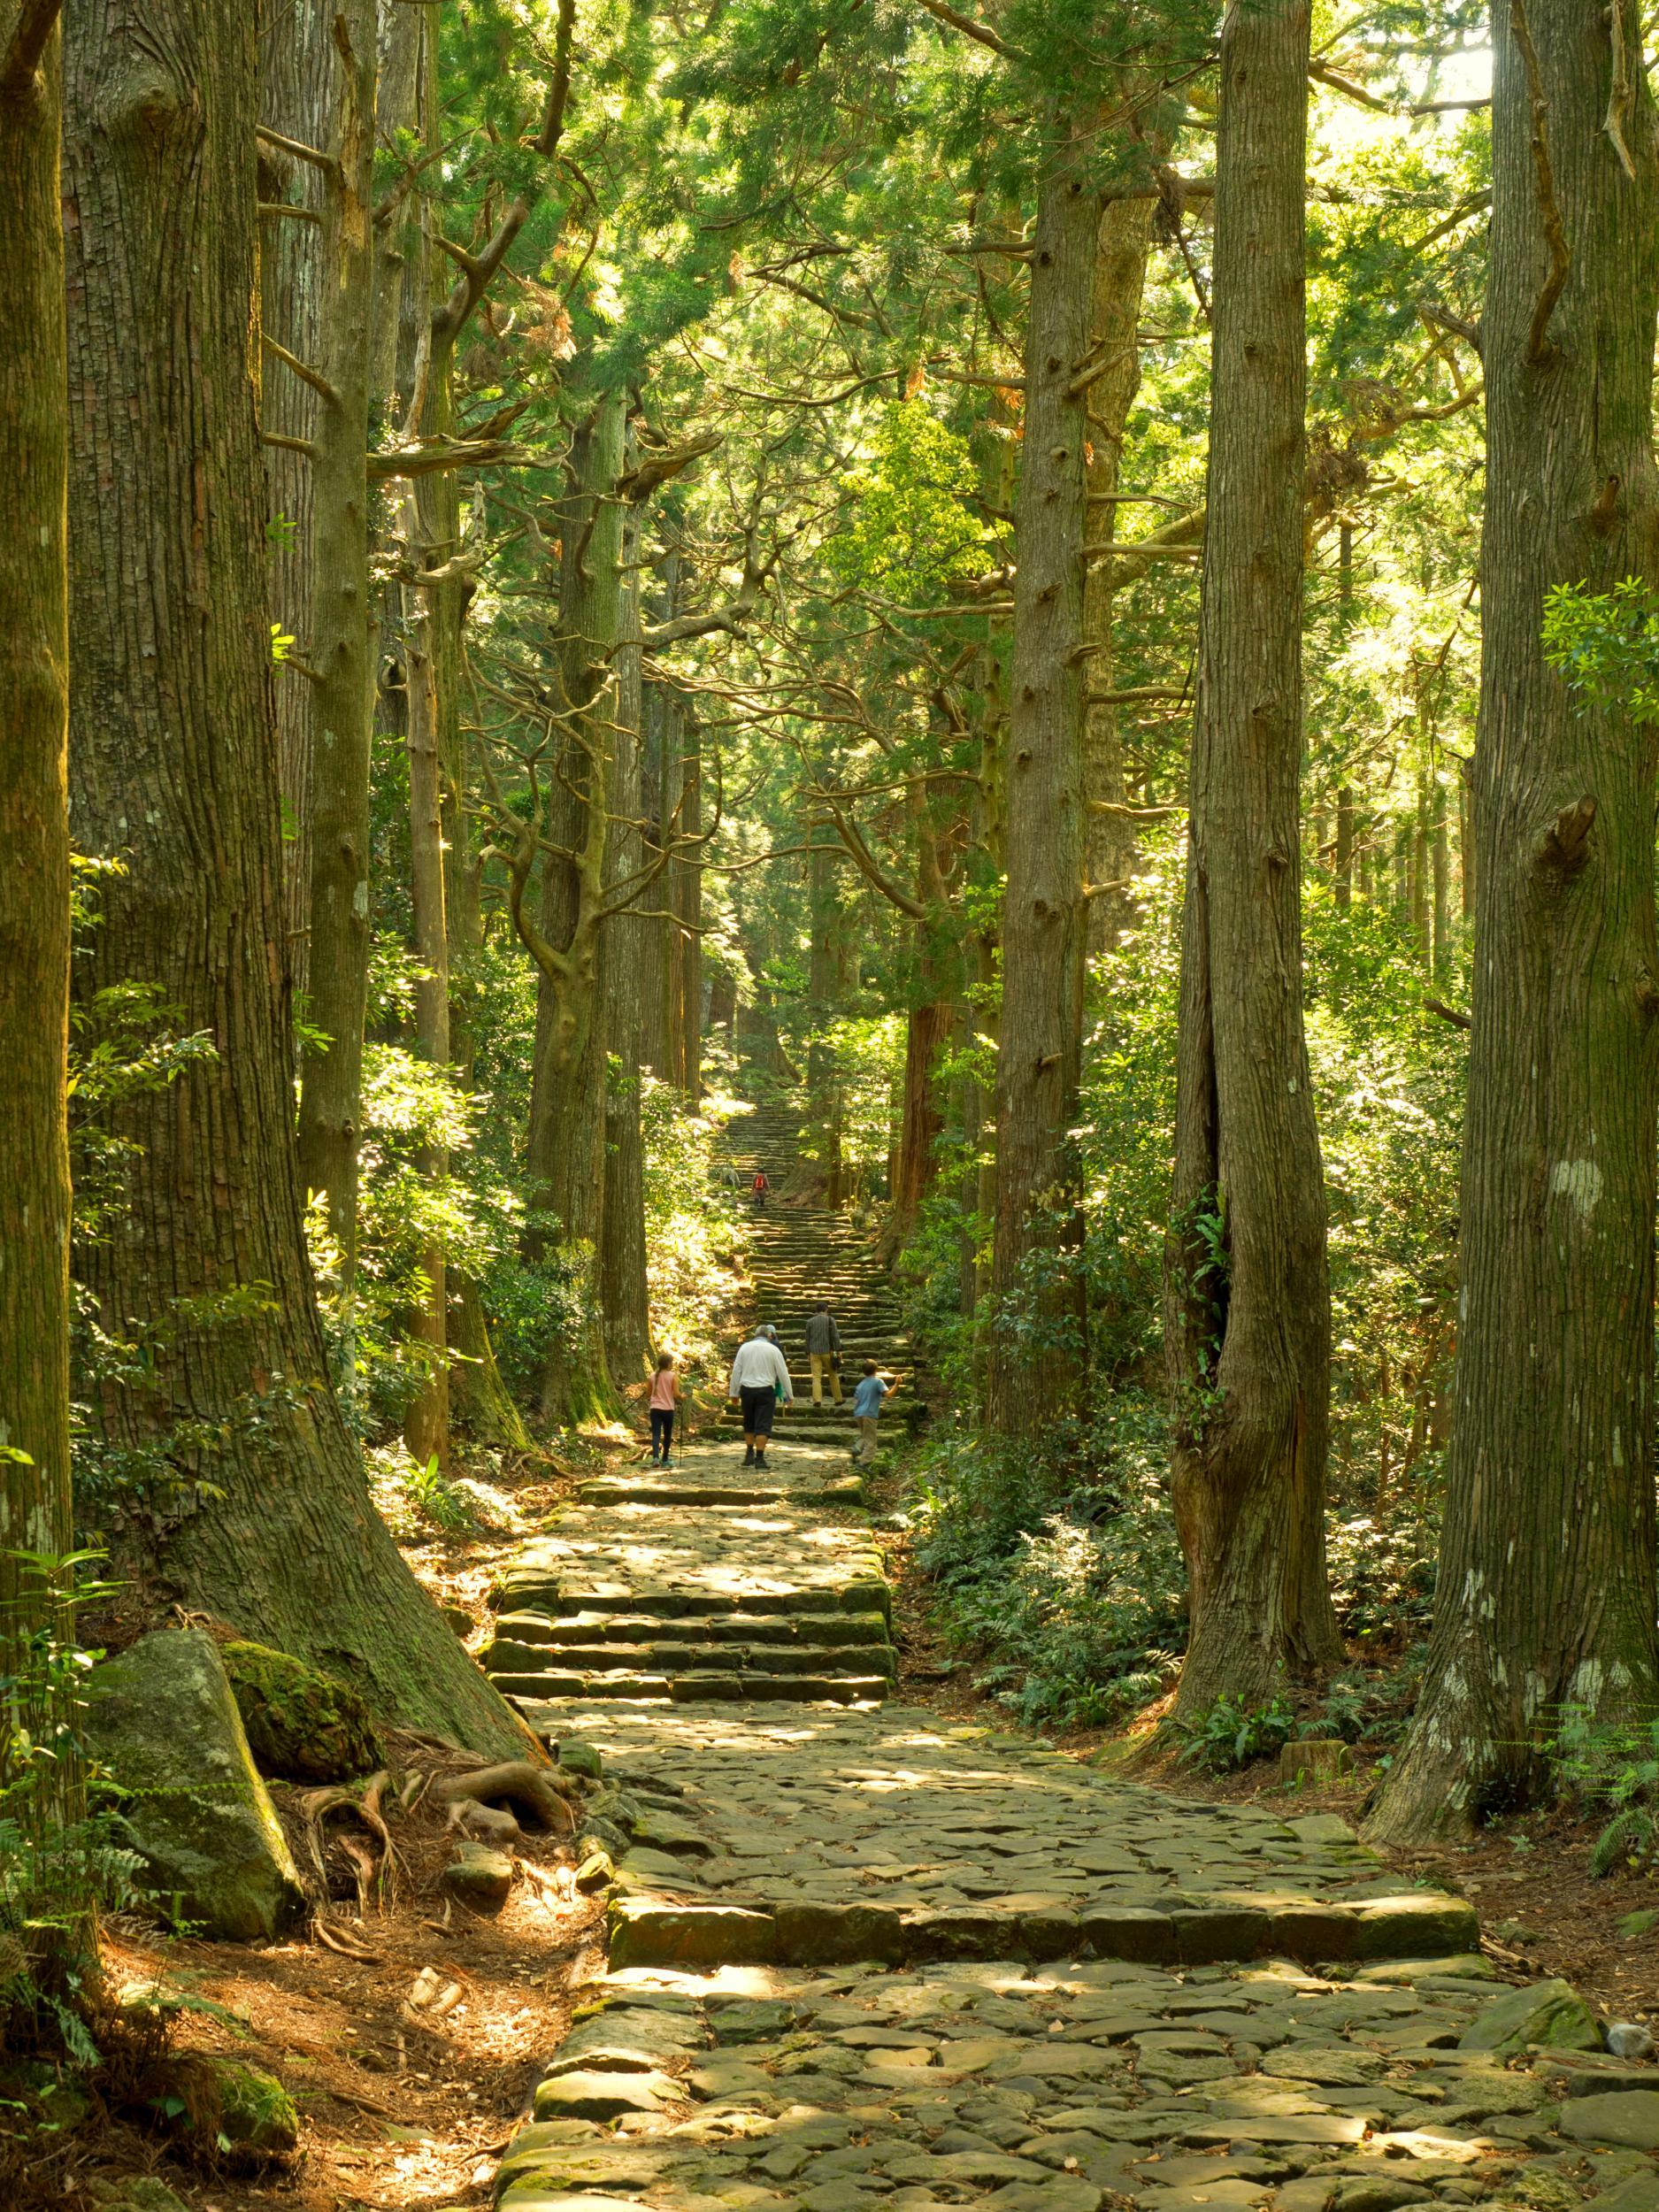 Walk through Japan's lush forests